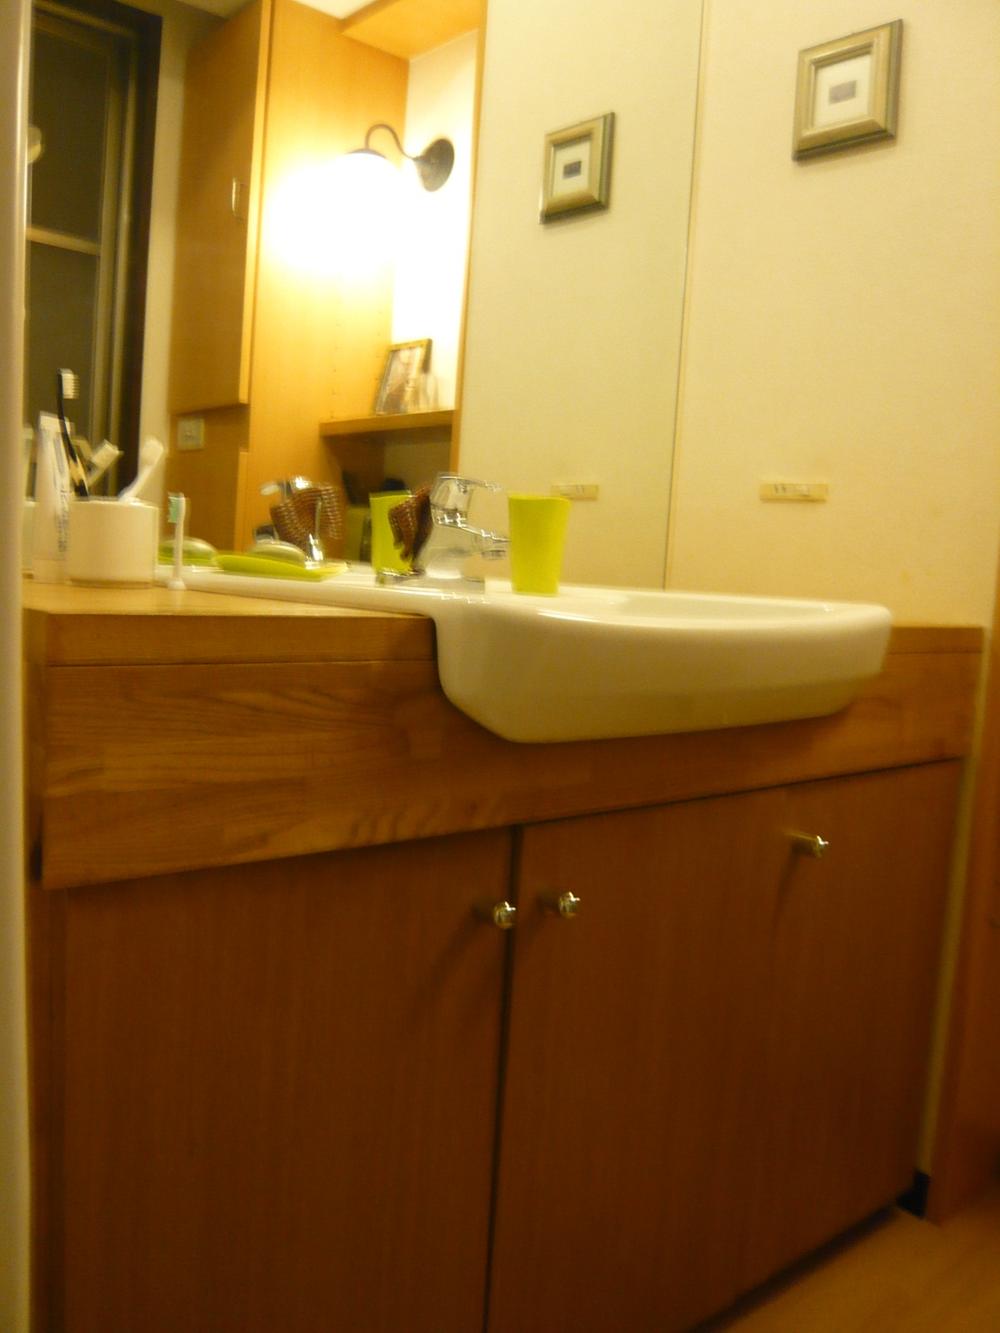 Wash basin, toilet. Stylish vanity with shooting solid wood